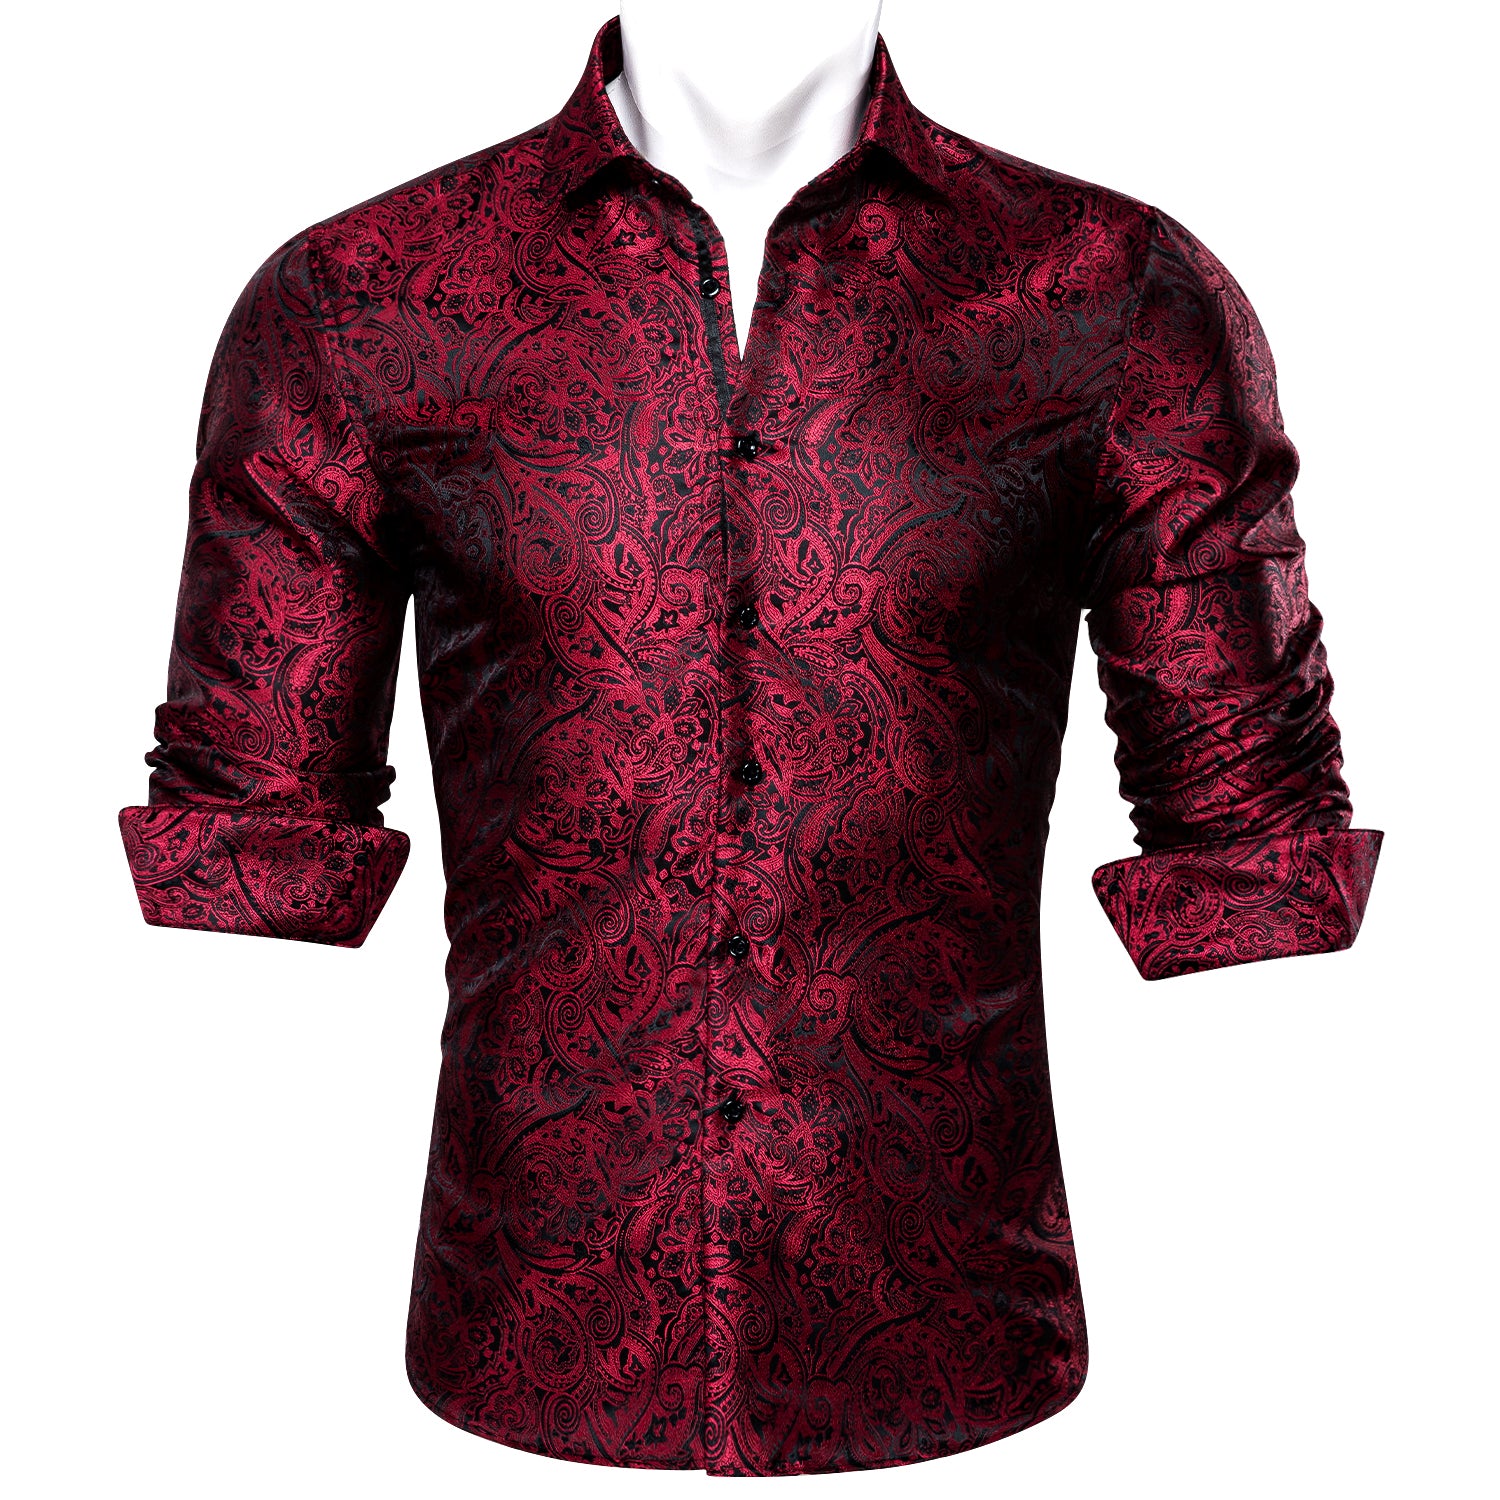 Barry.wang Button Down Shirt Red Black Paisley Silk Men's Shirt Formal